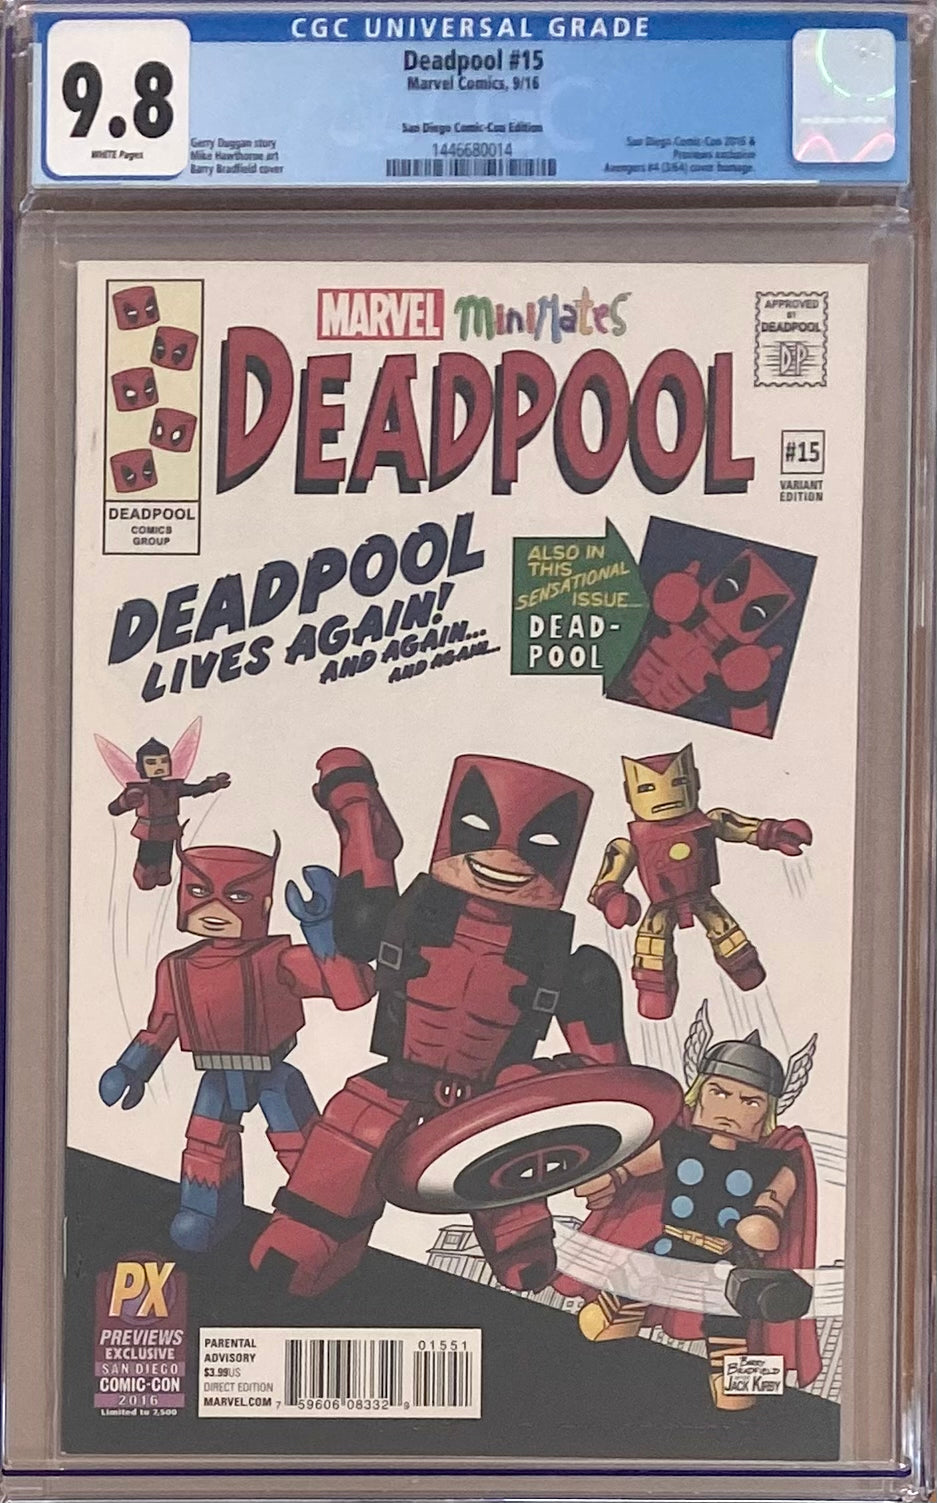 Deadpool #15 SDCC Exclusive Variant CGC 9.8